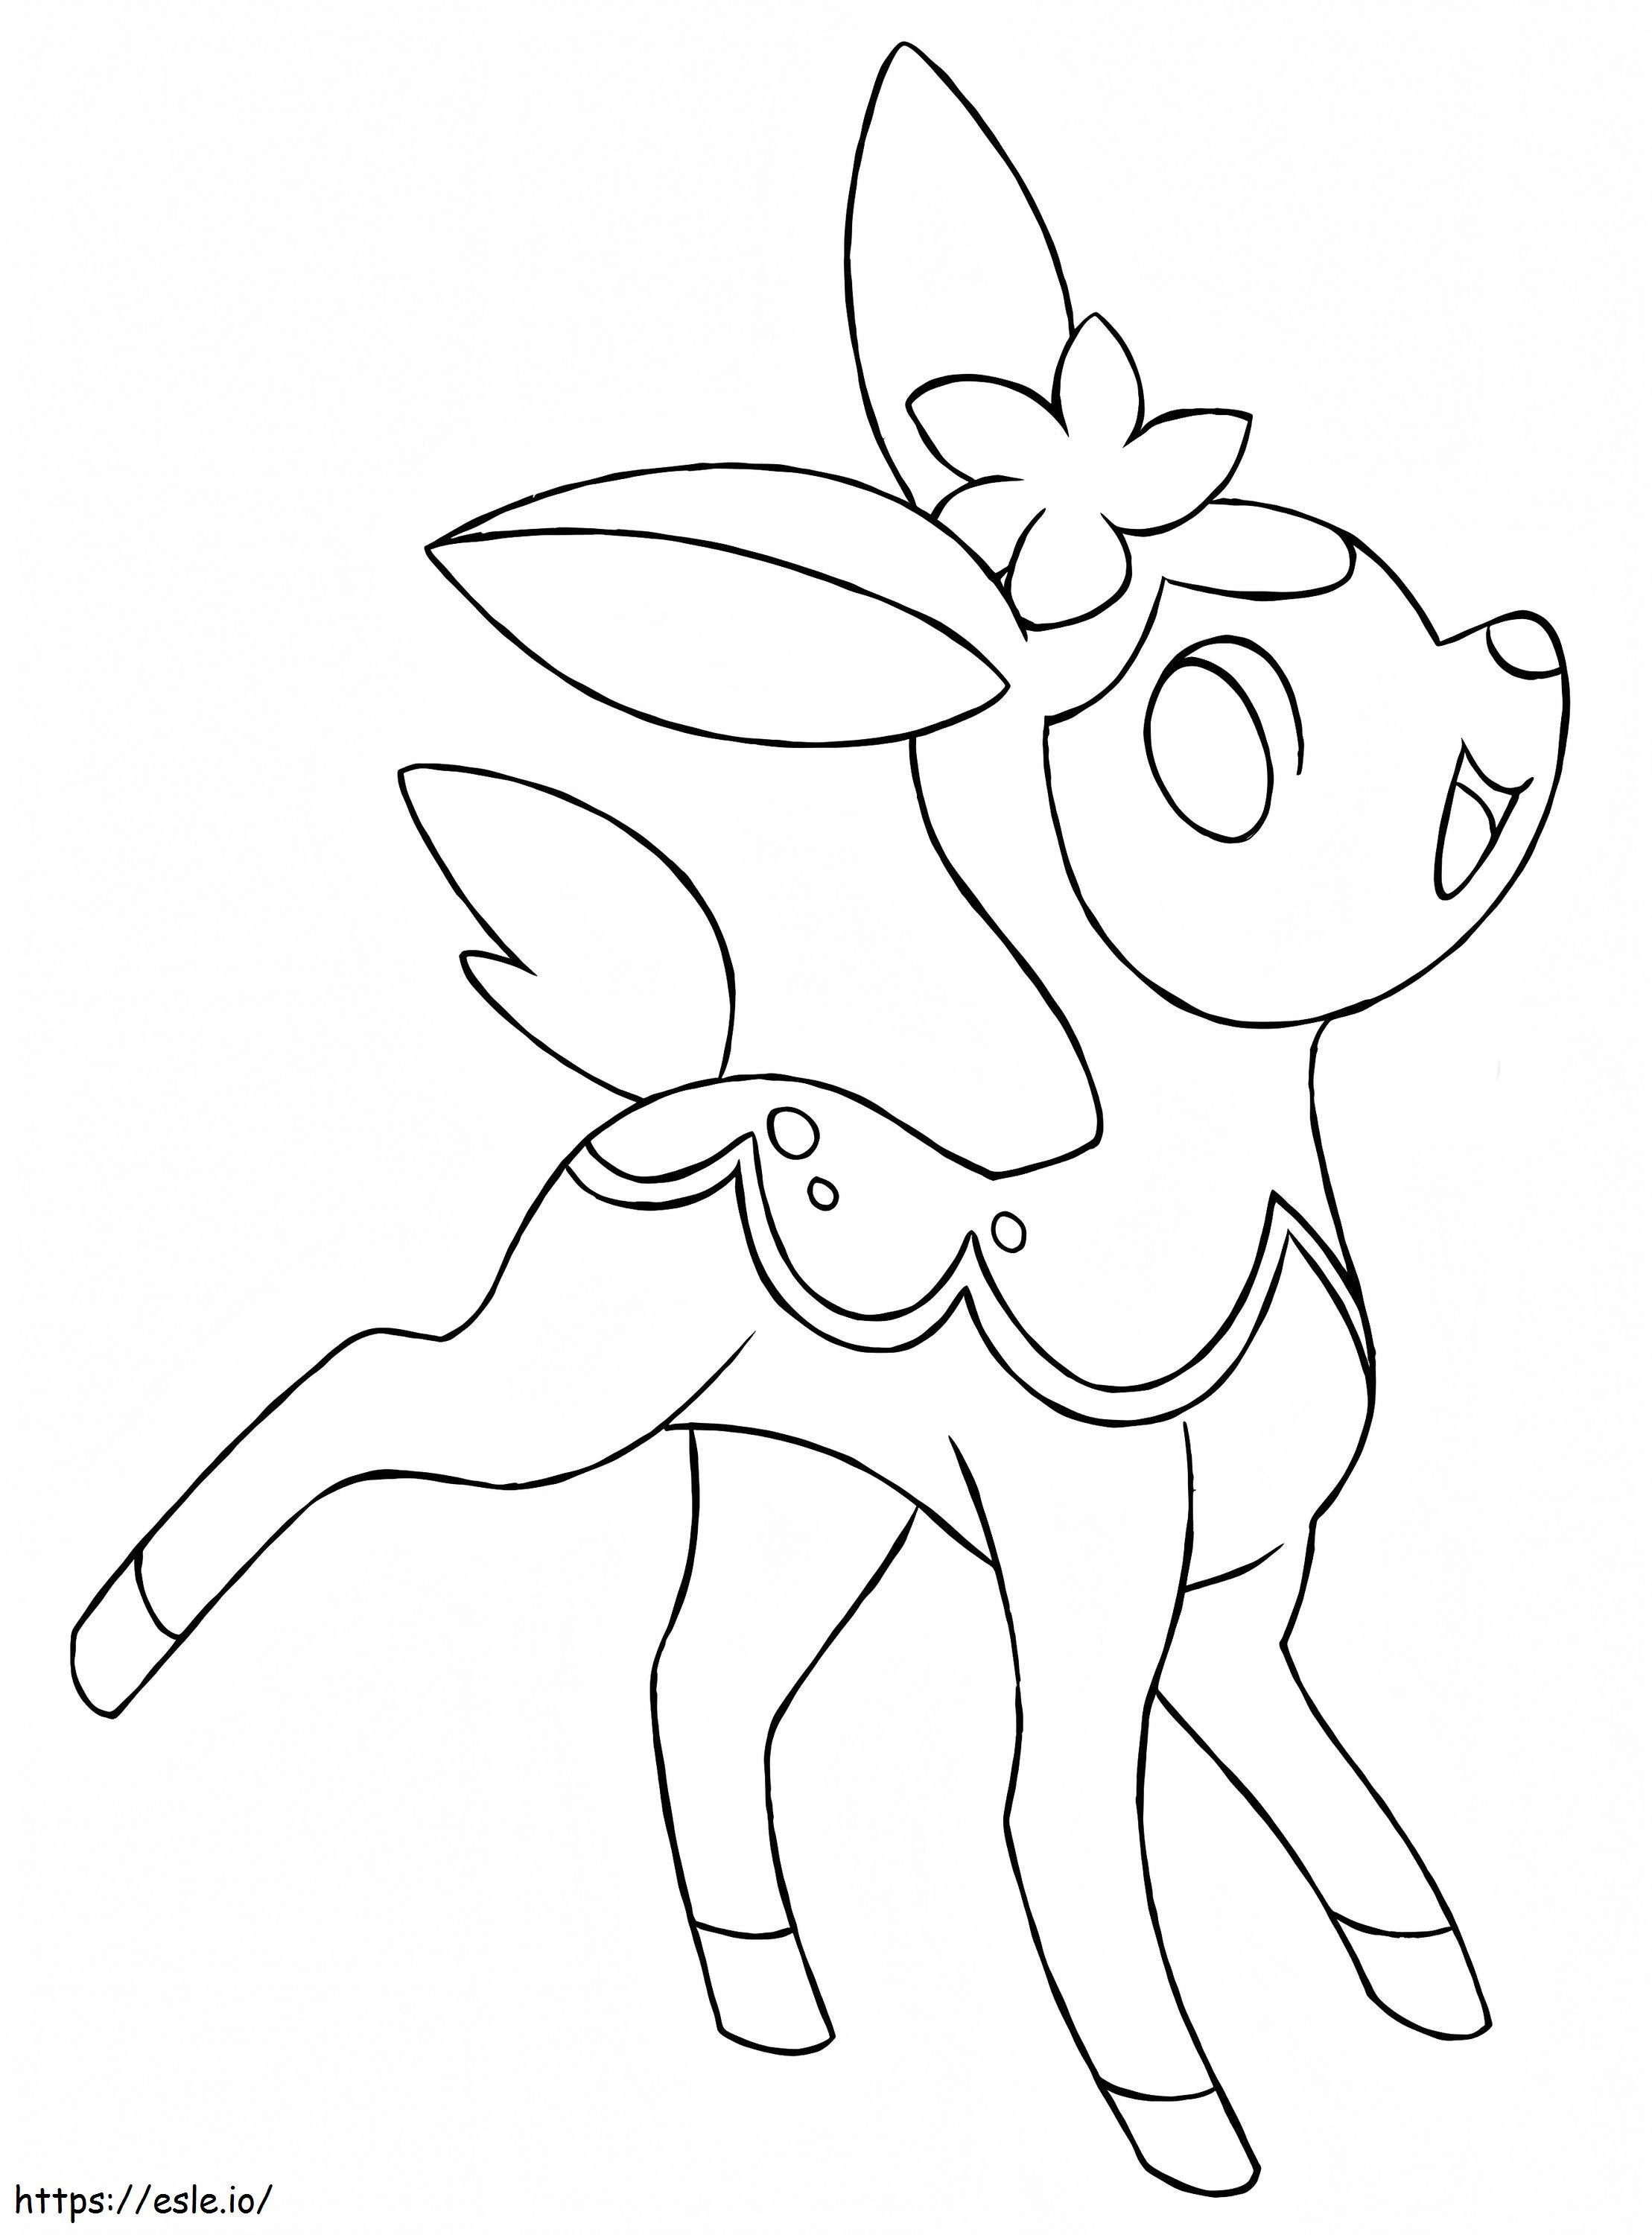 Deerling Pokemon coloring page